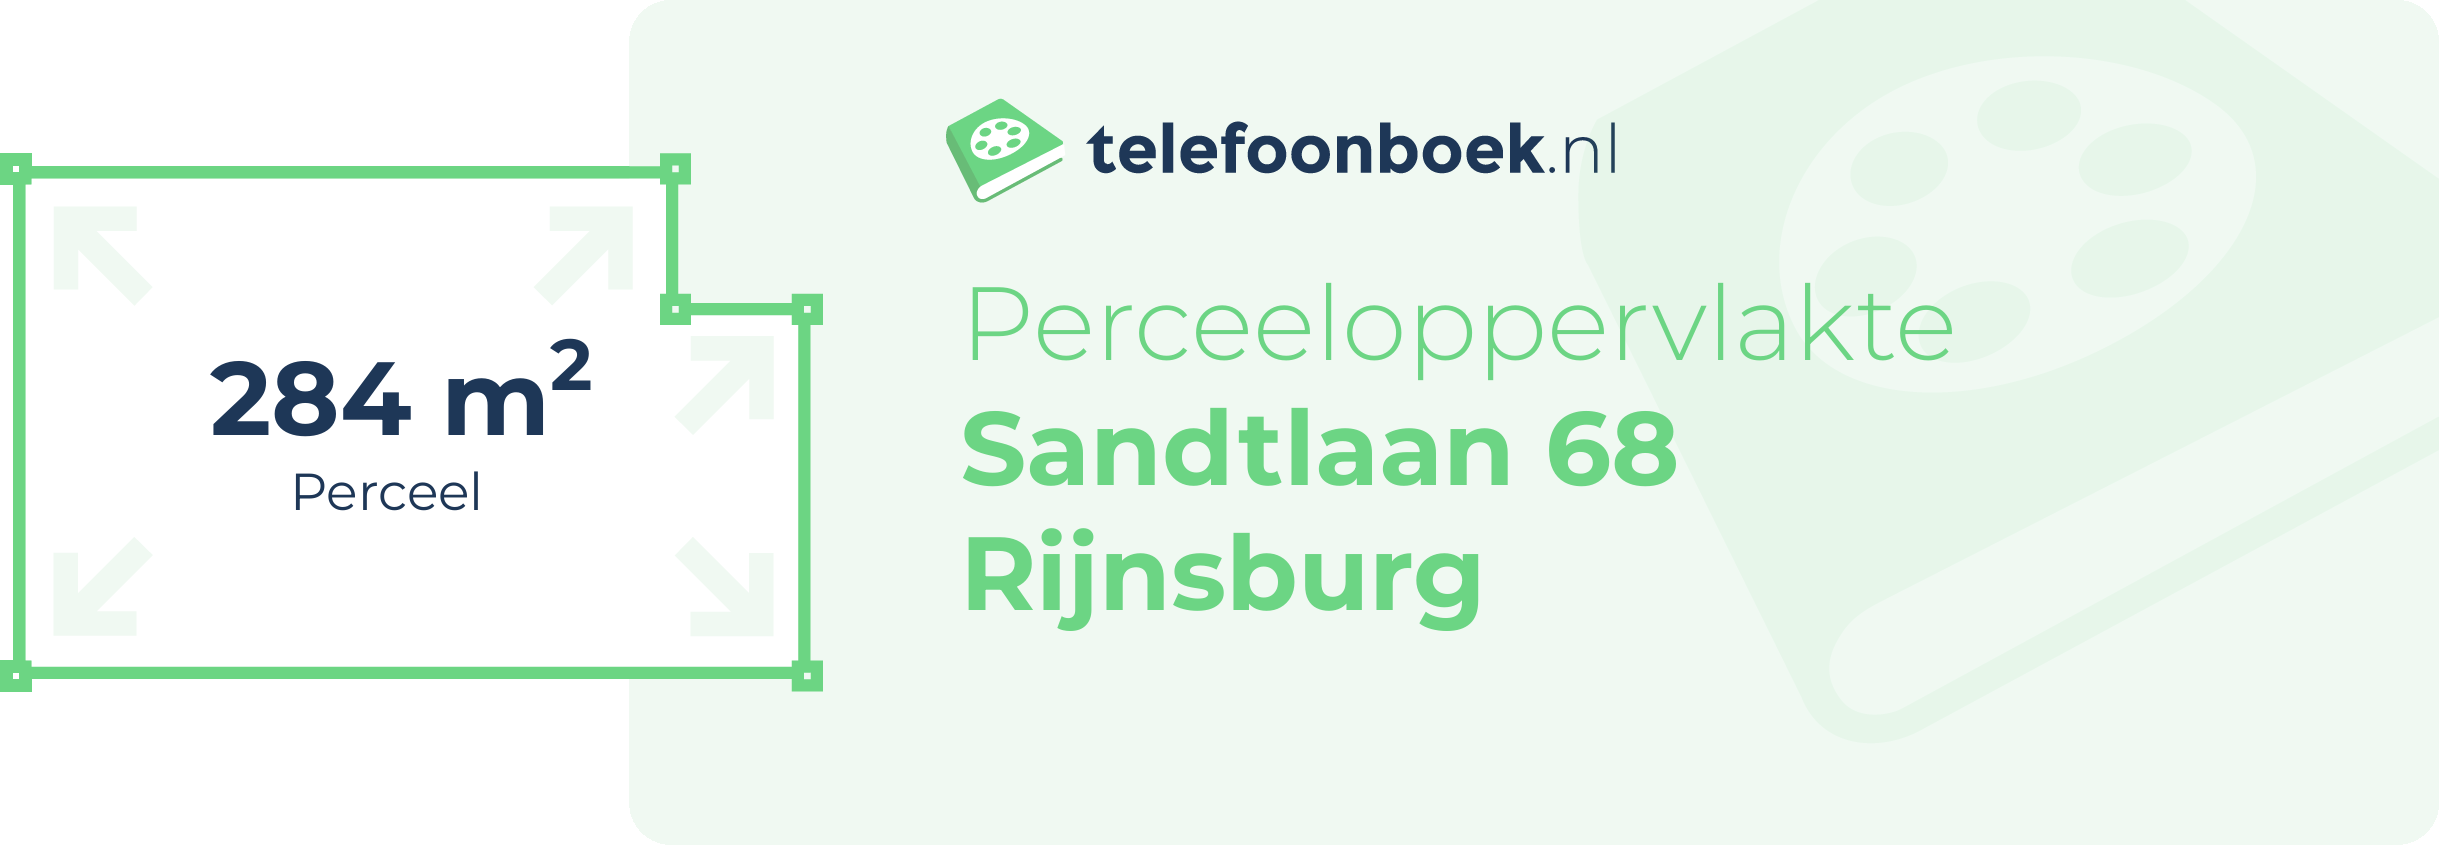 Perceeloppervlakte Sandtlaan 68 Rijnsburg